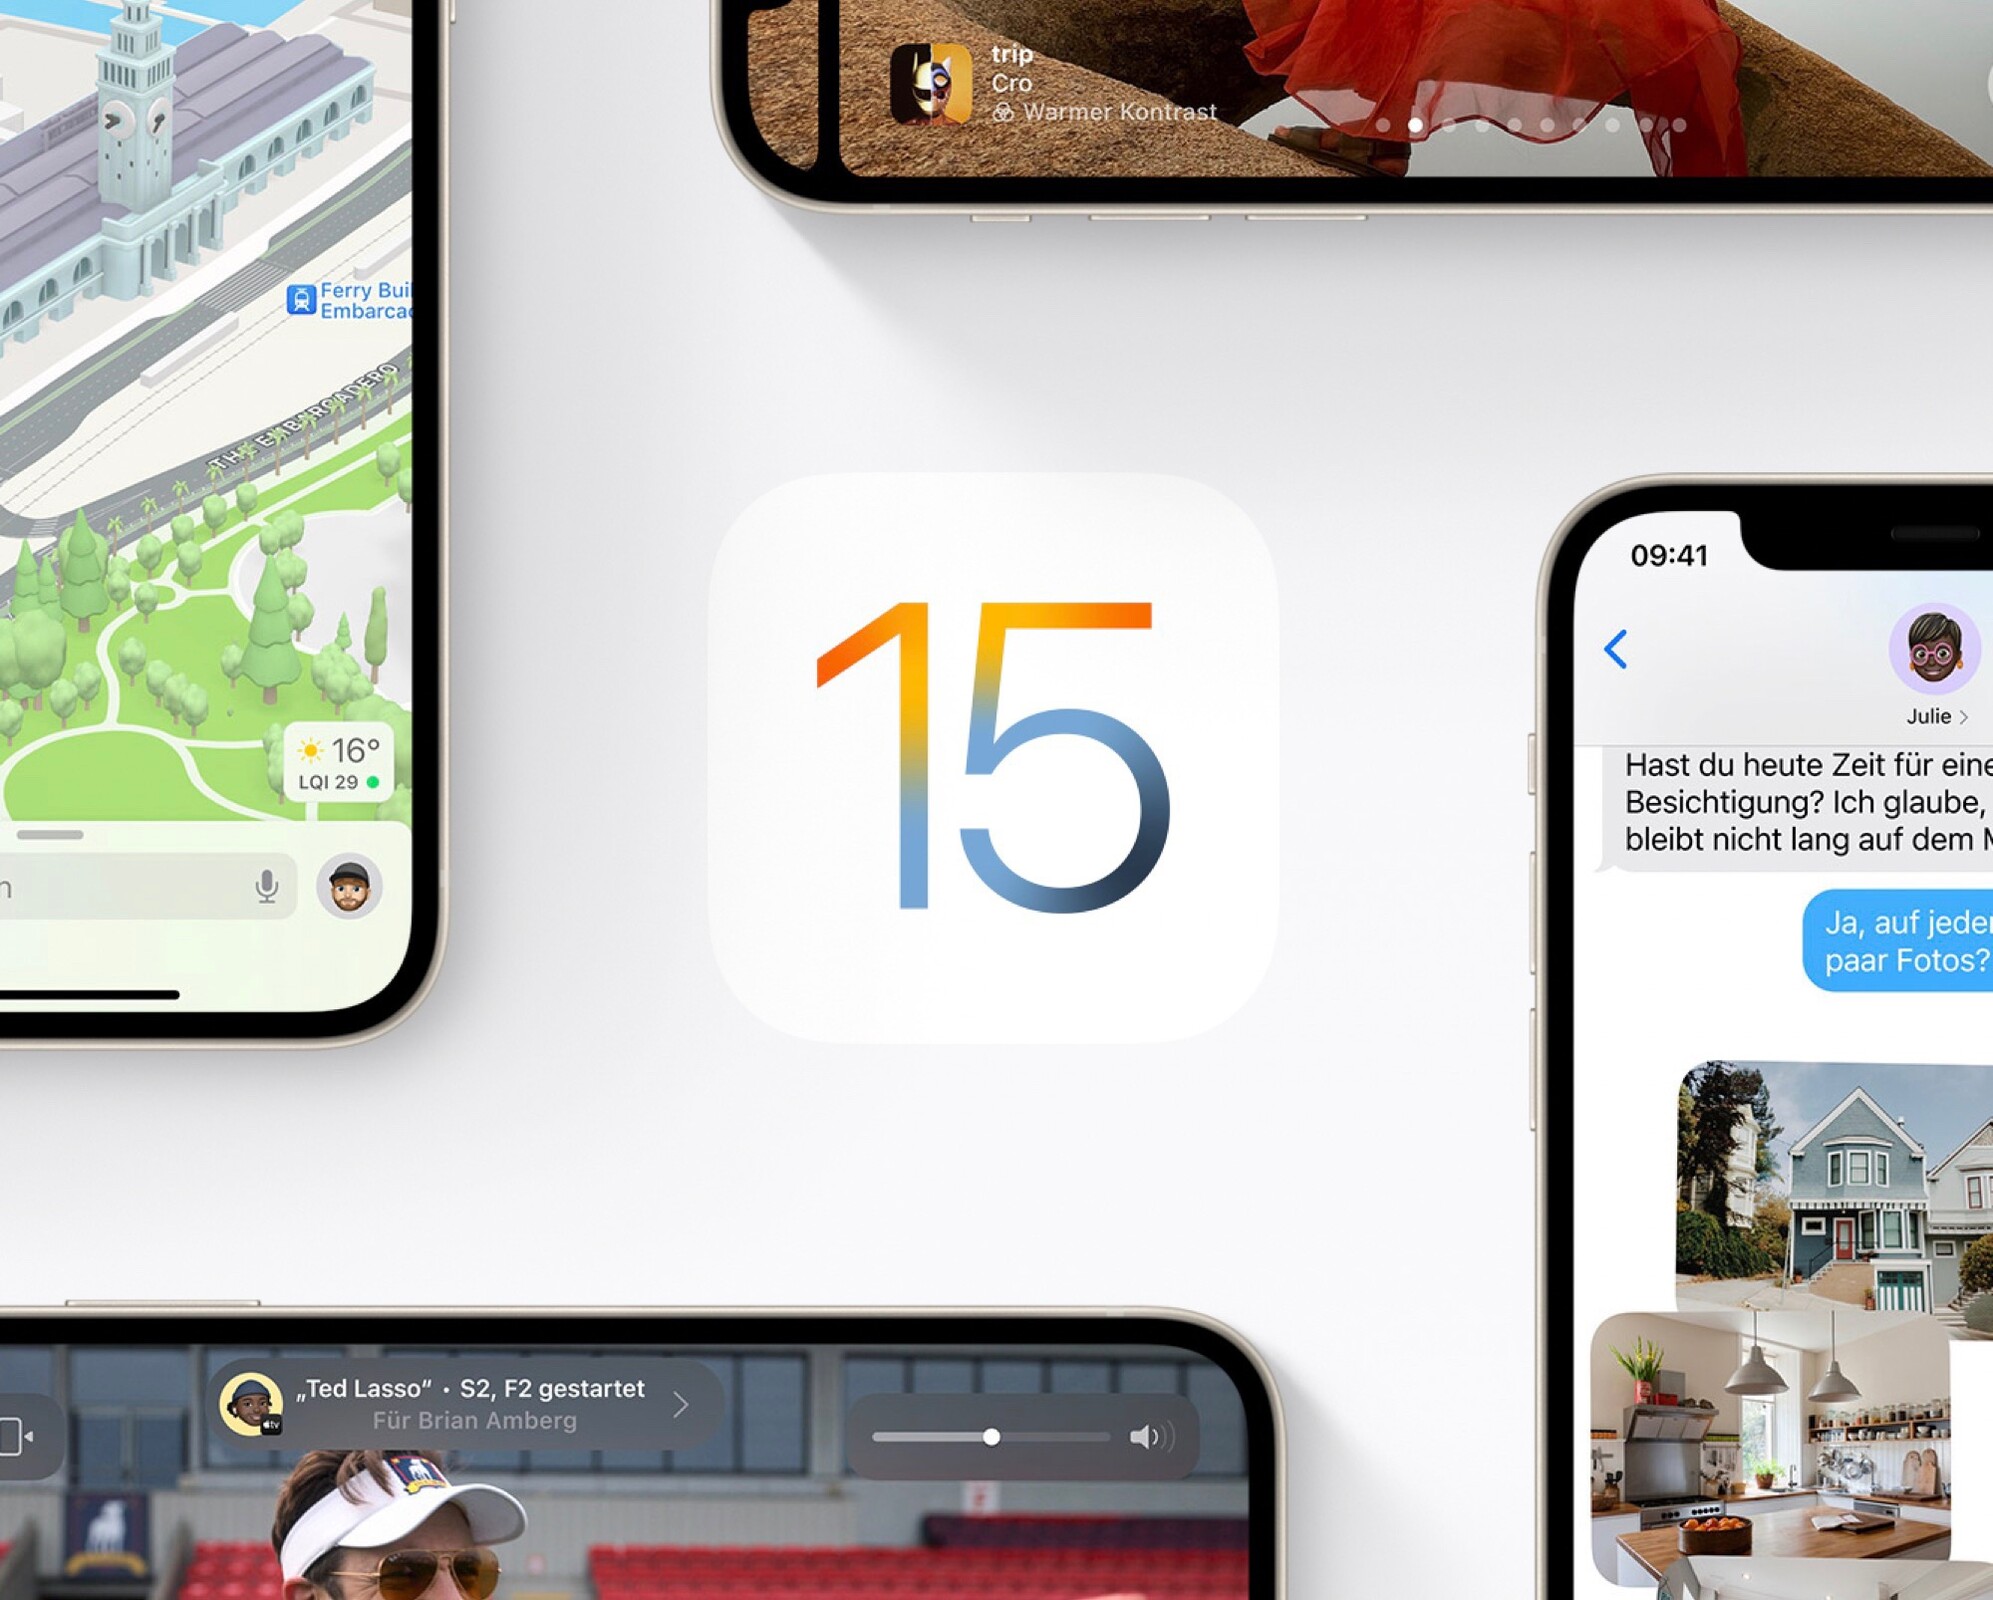 Jailbreak iOS 15.4 On iPhone And iPad Status Update